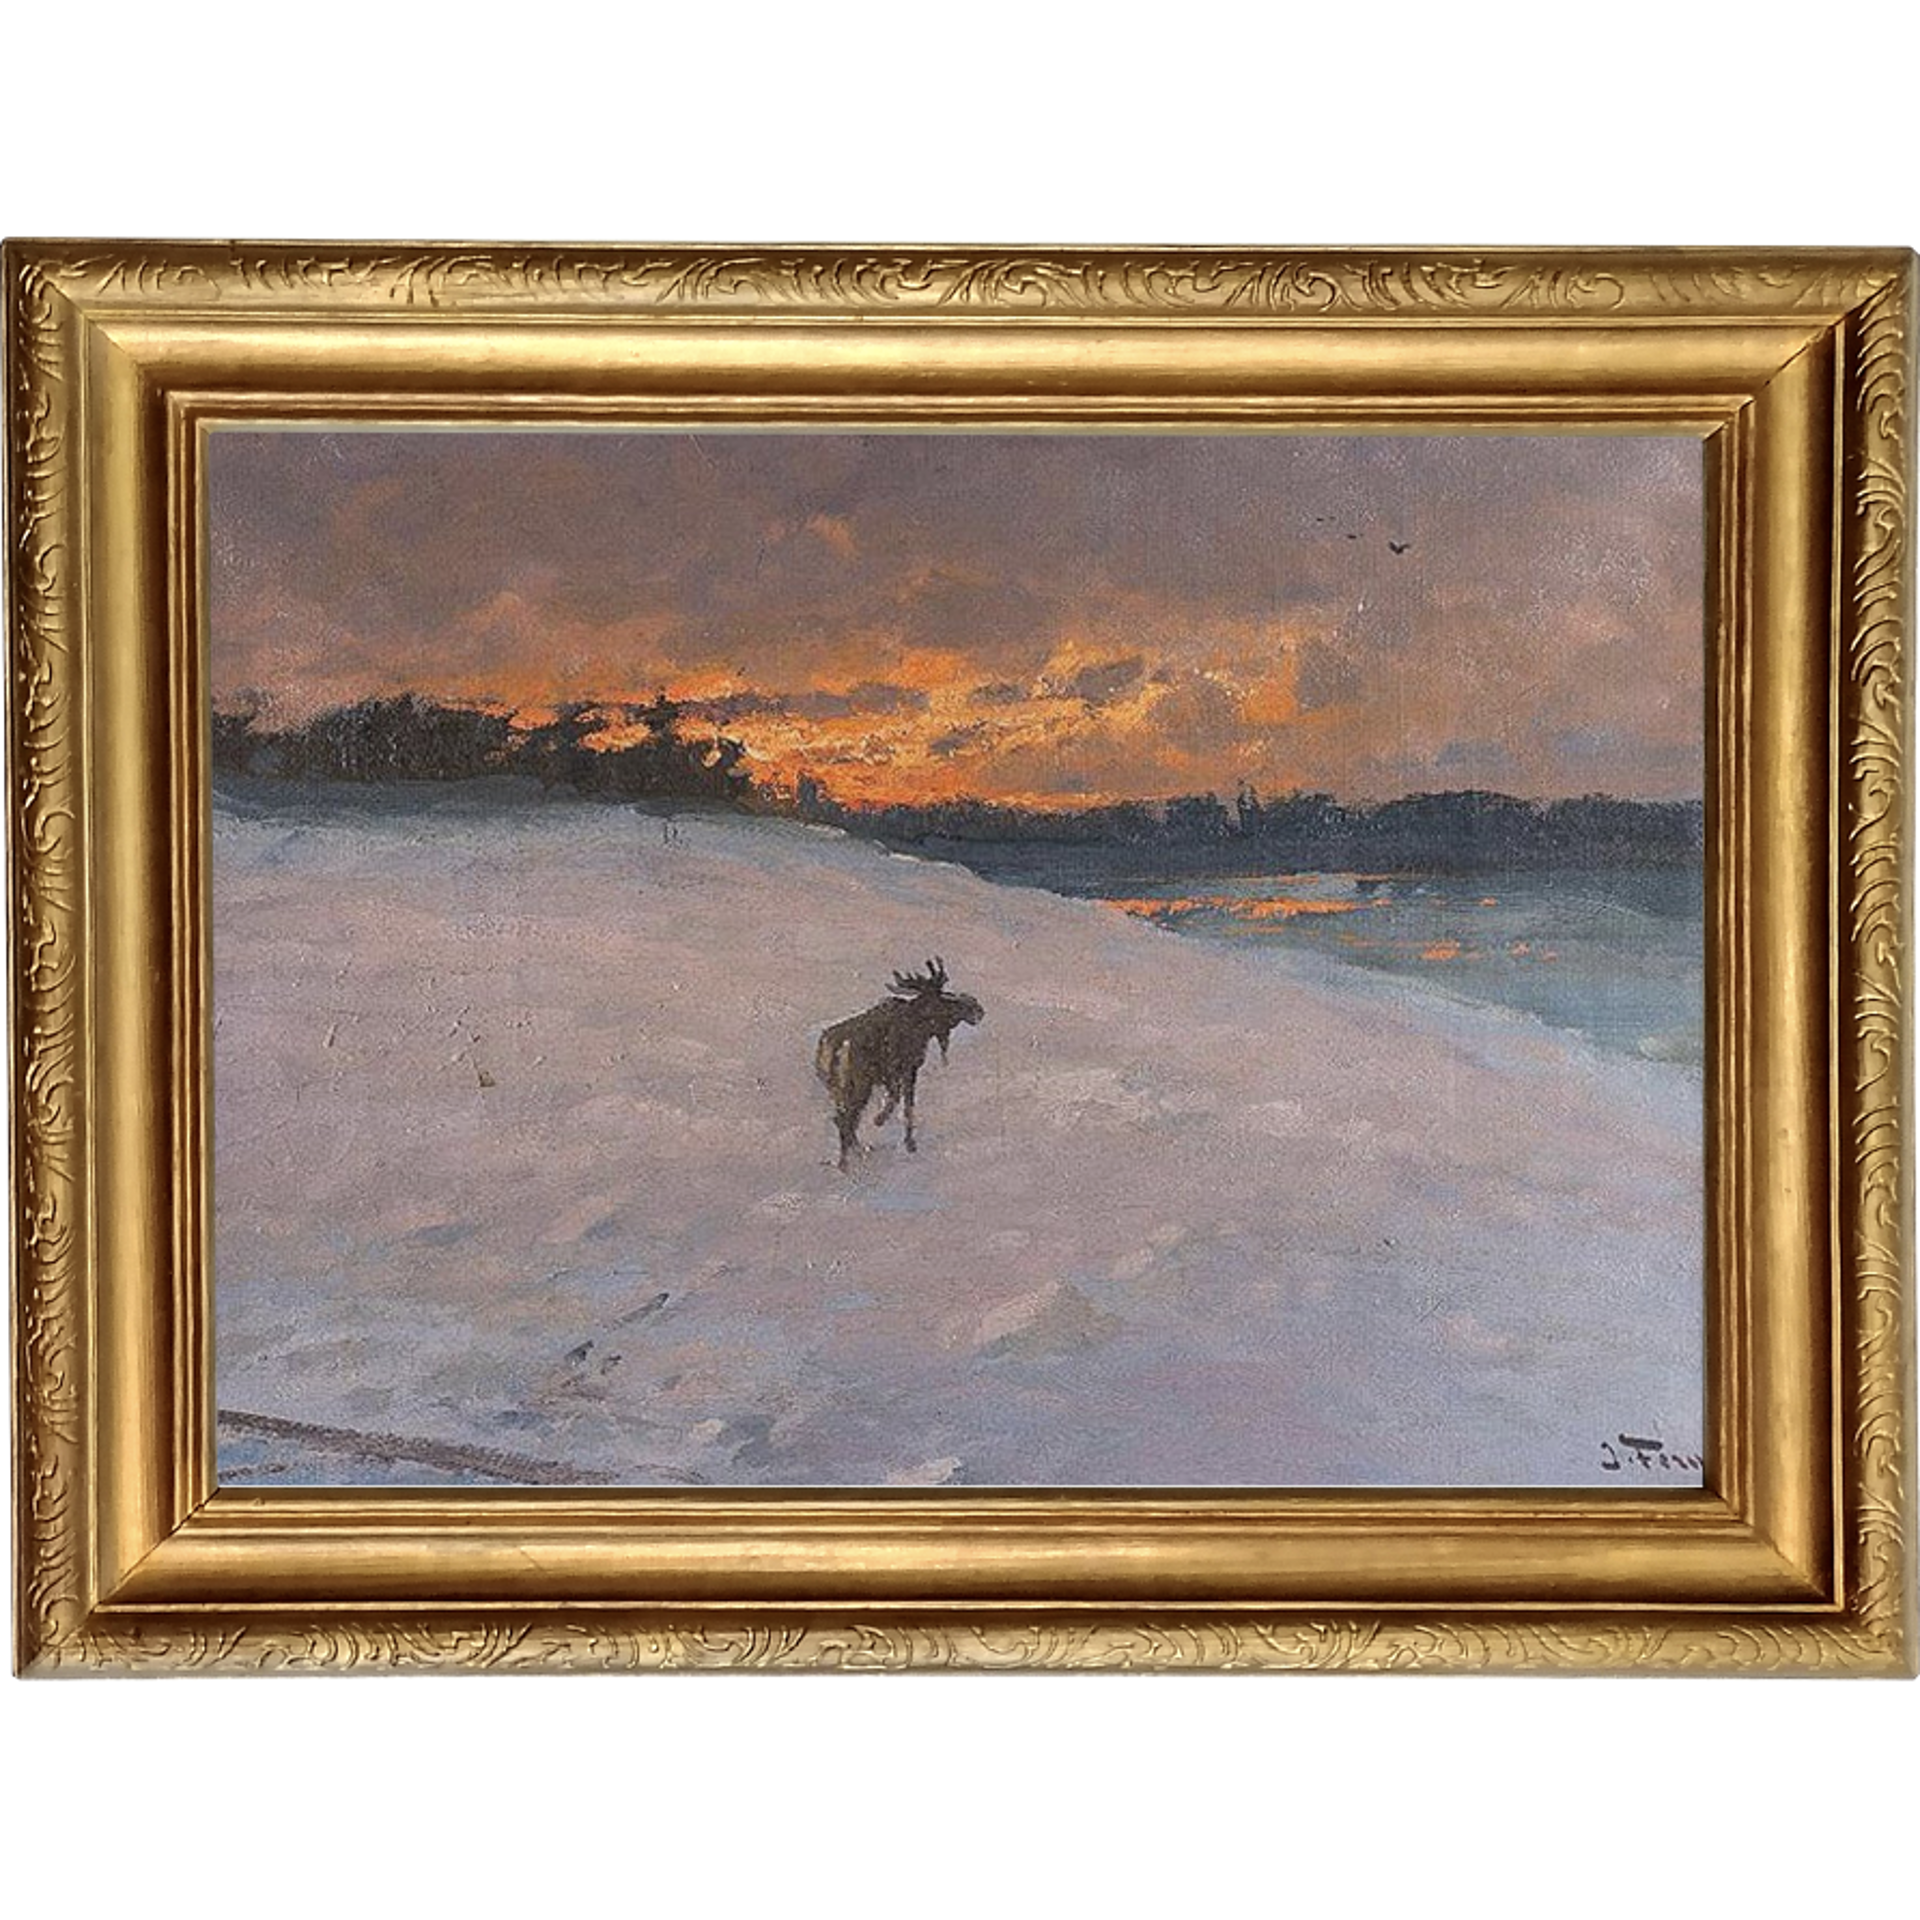 Moose at Sunset by John Fery [1859-1934]